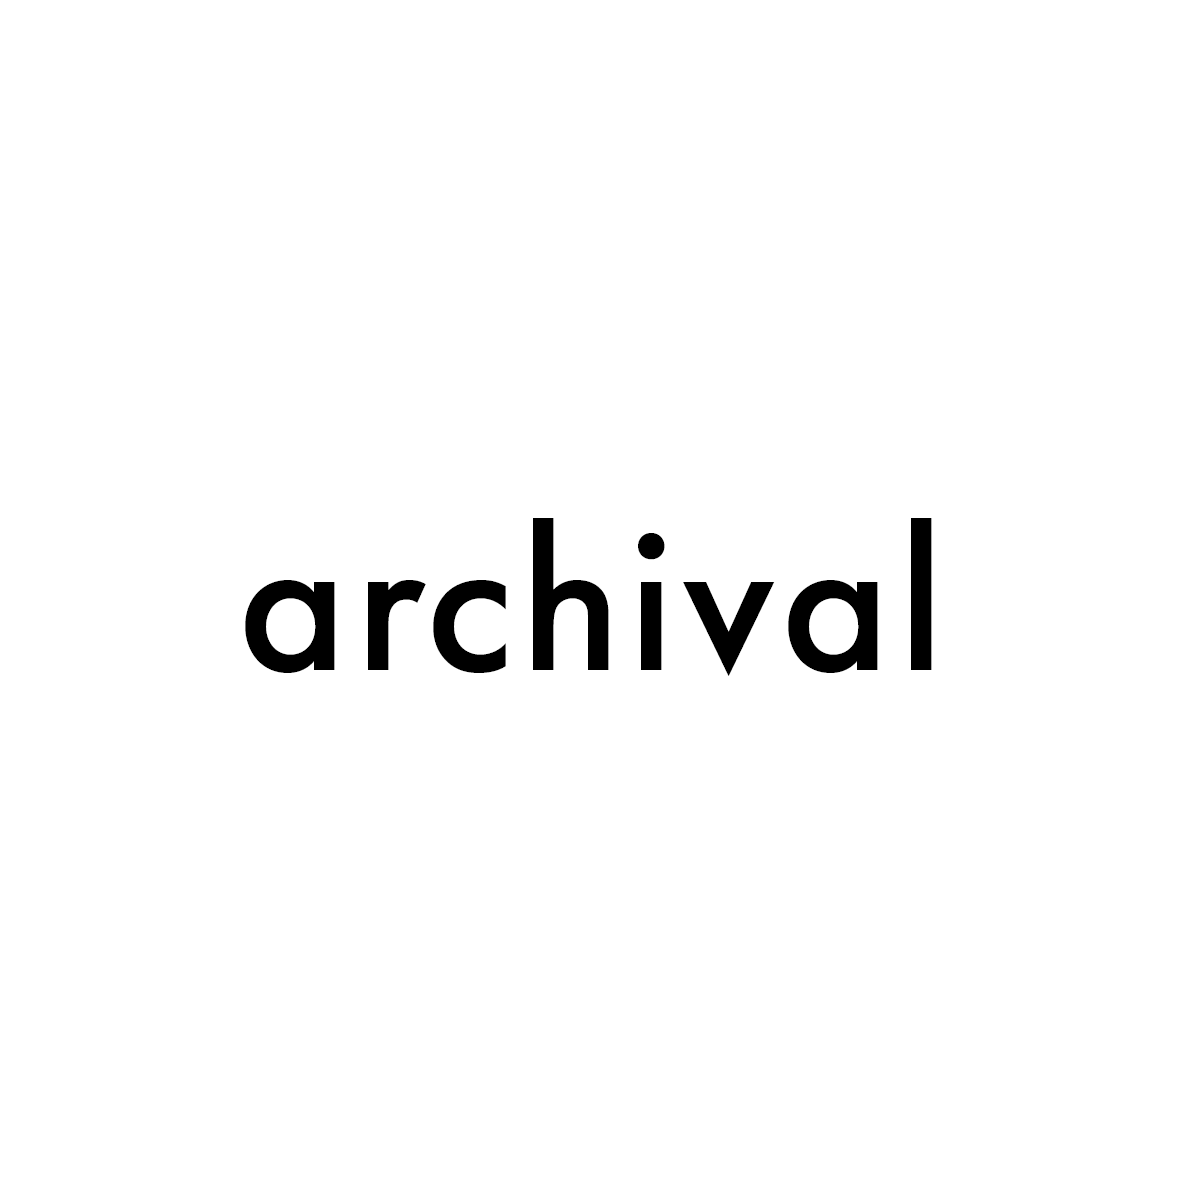 archival